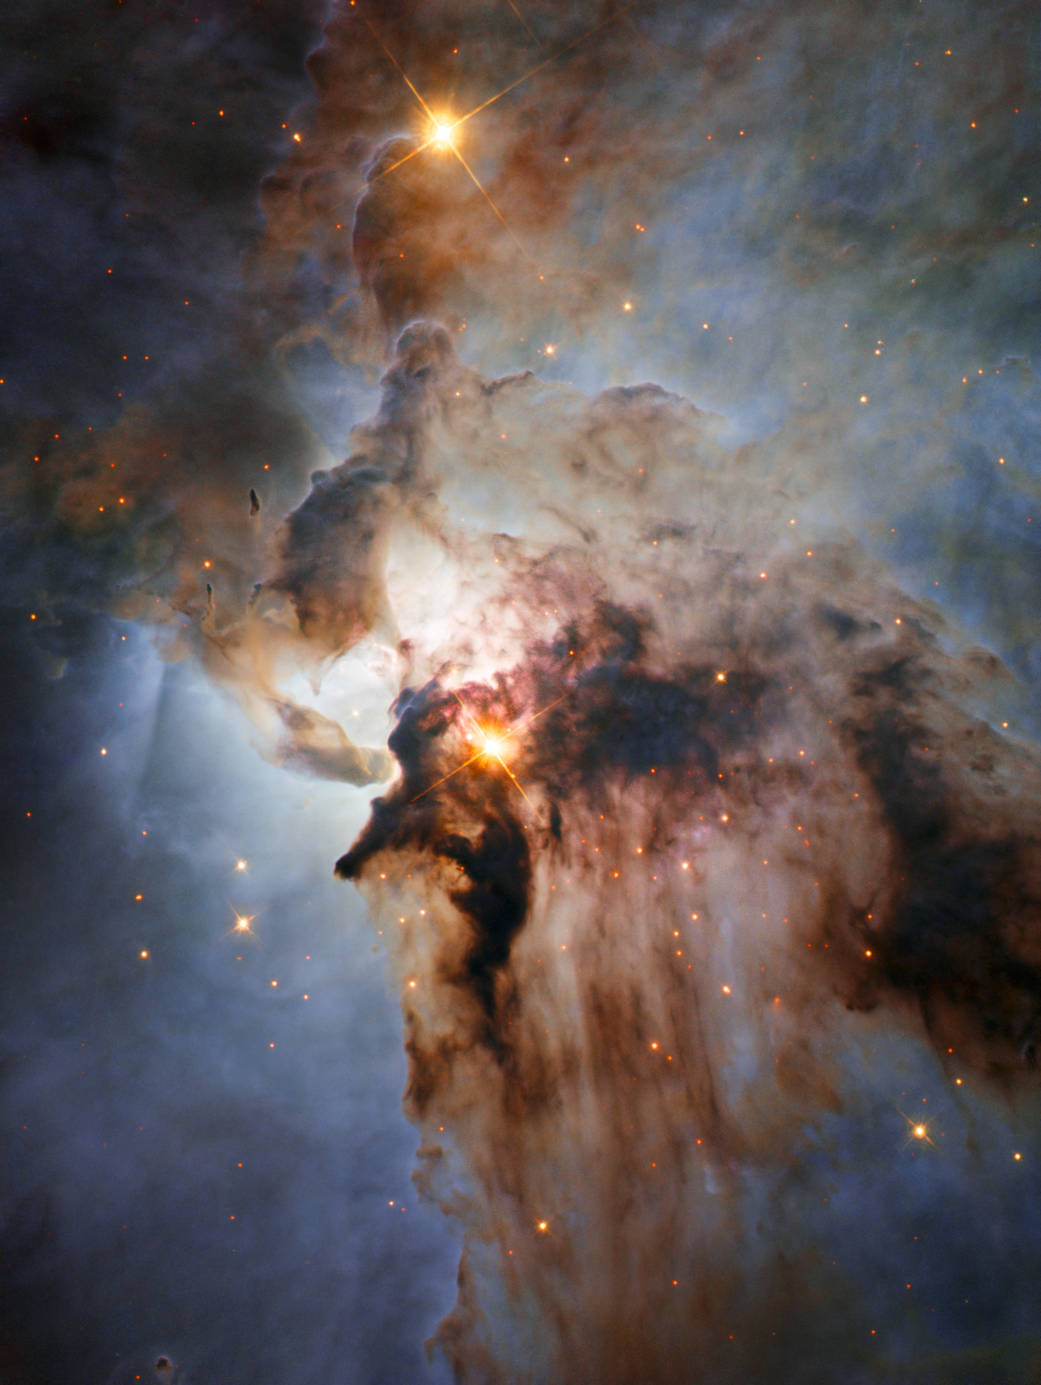 Hubble views the Lagoon Nebula